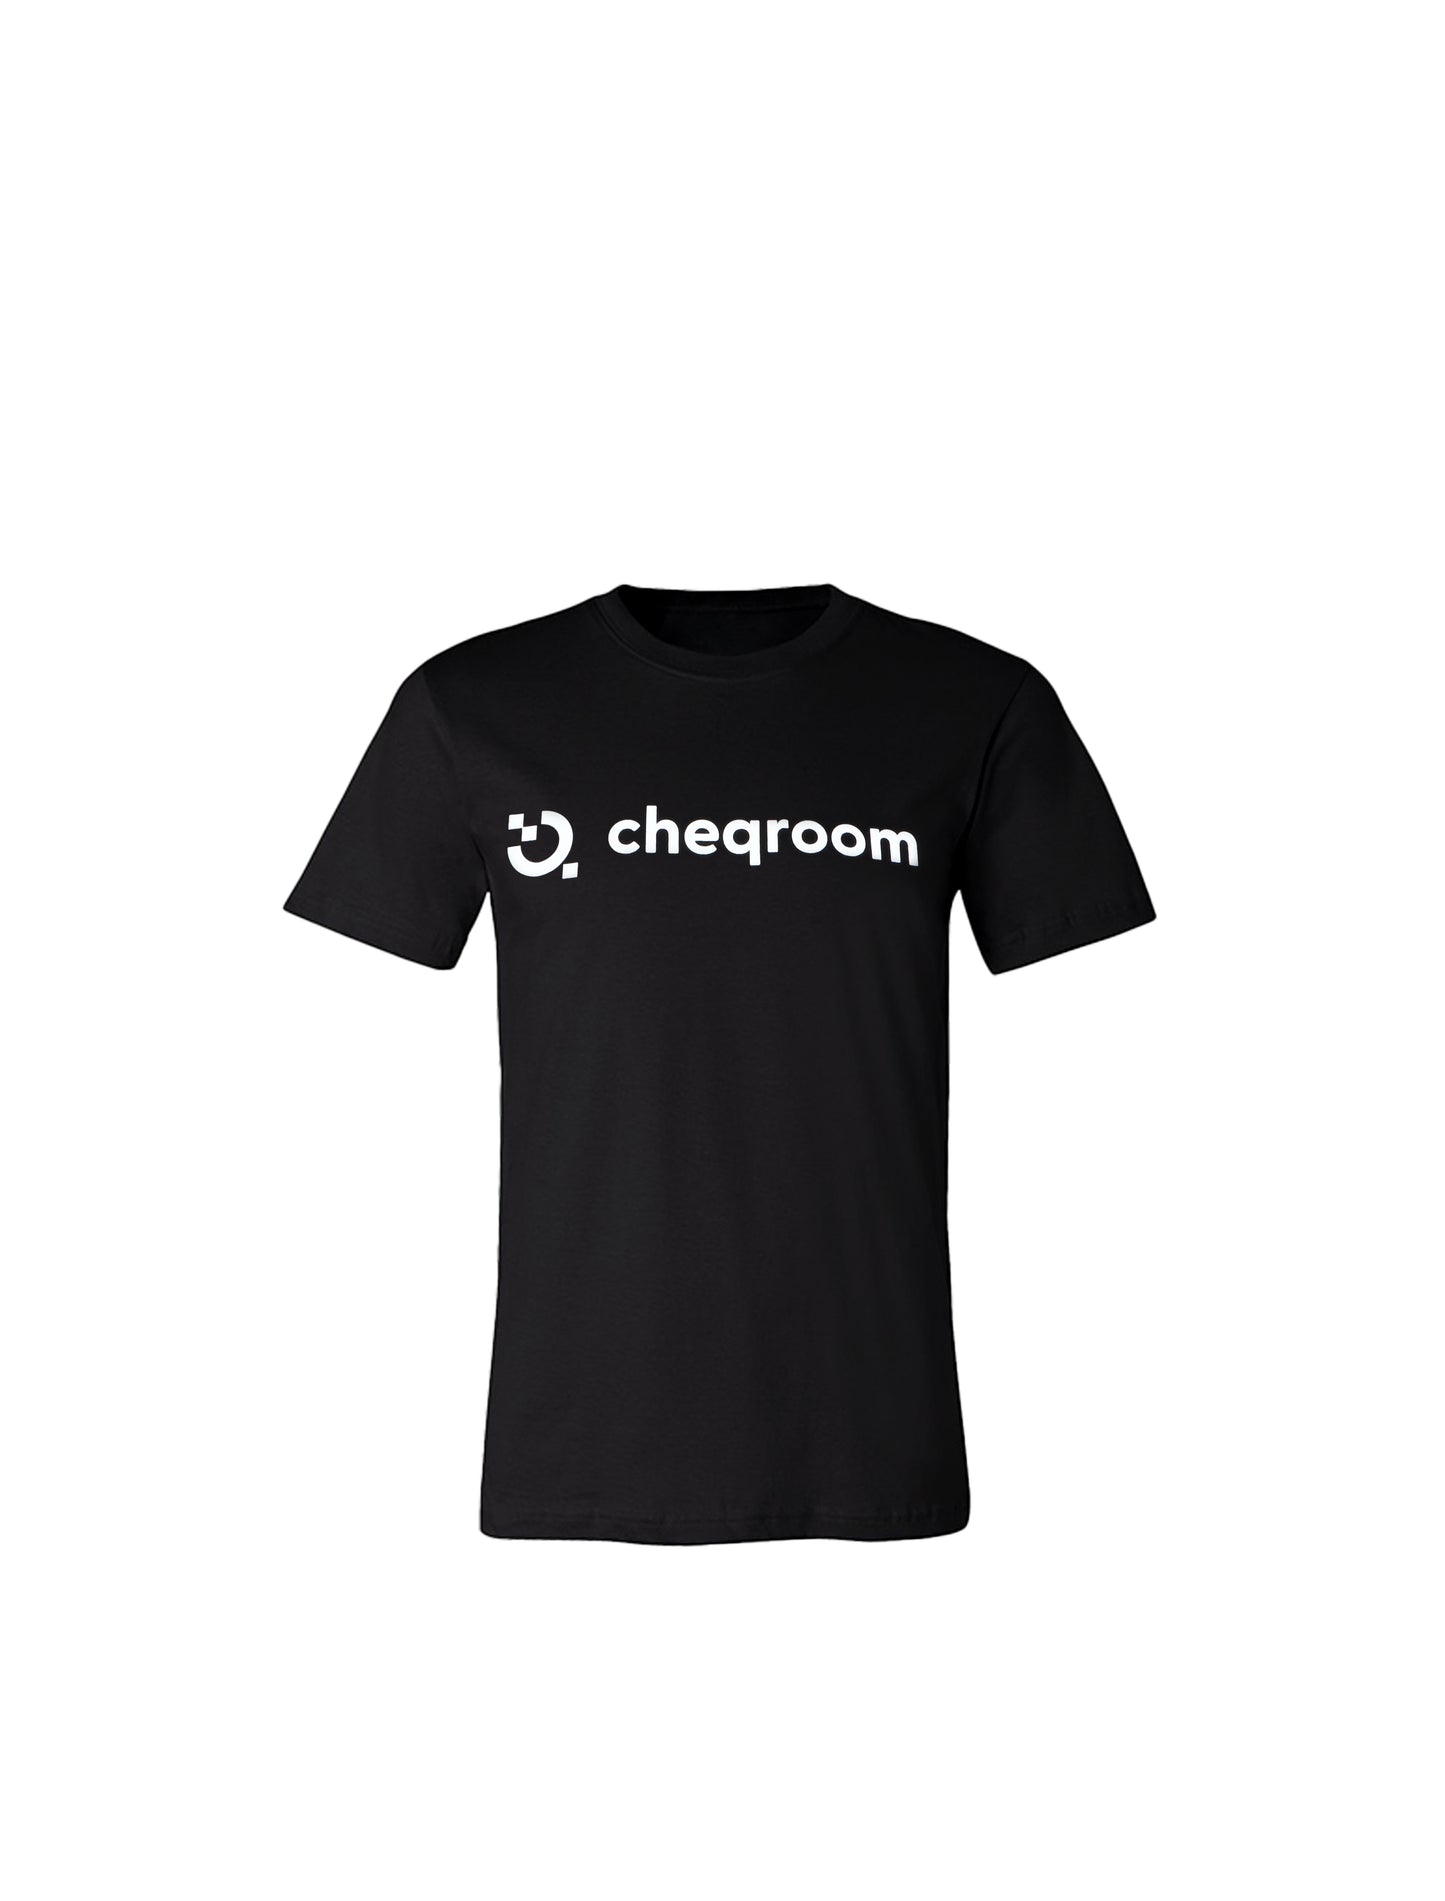 The Cheqroom t-shirt